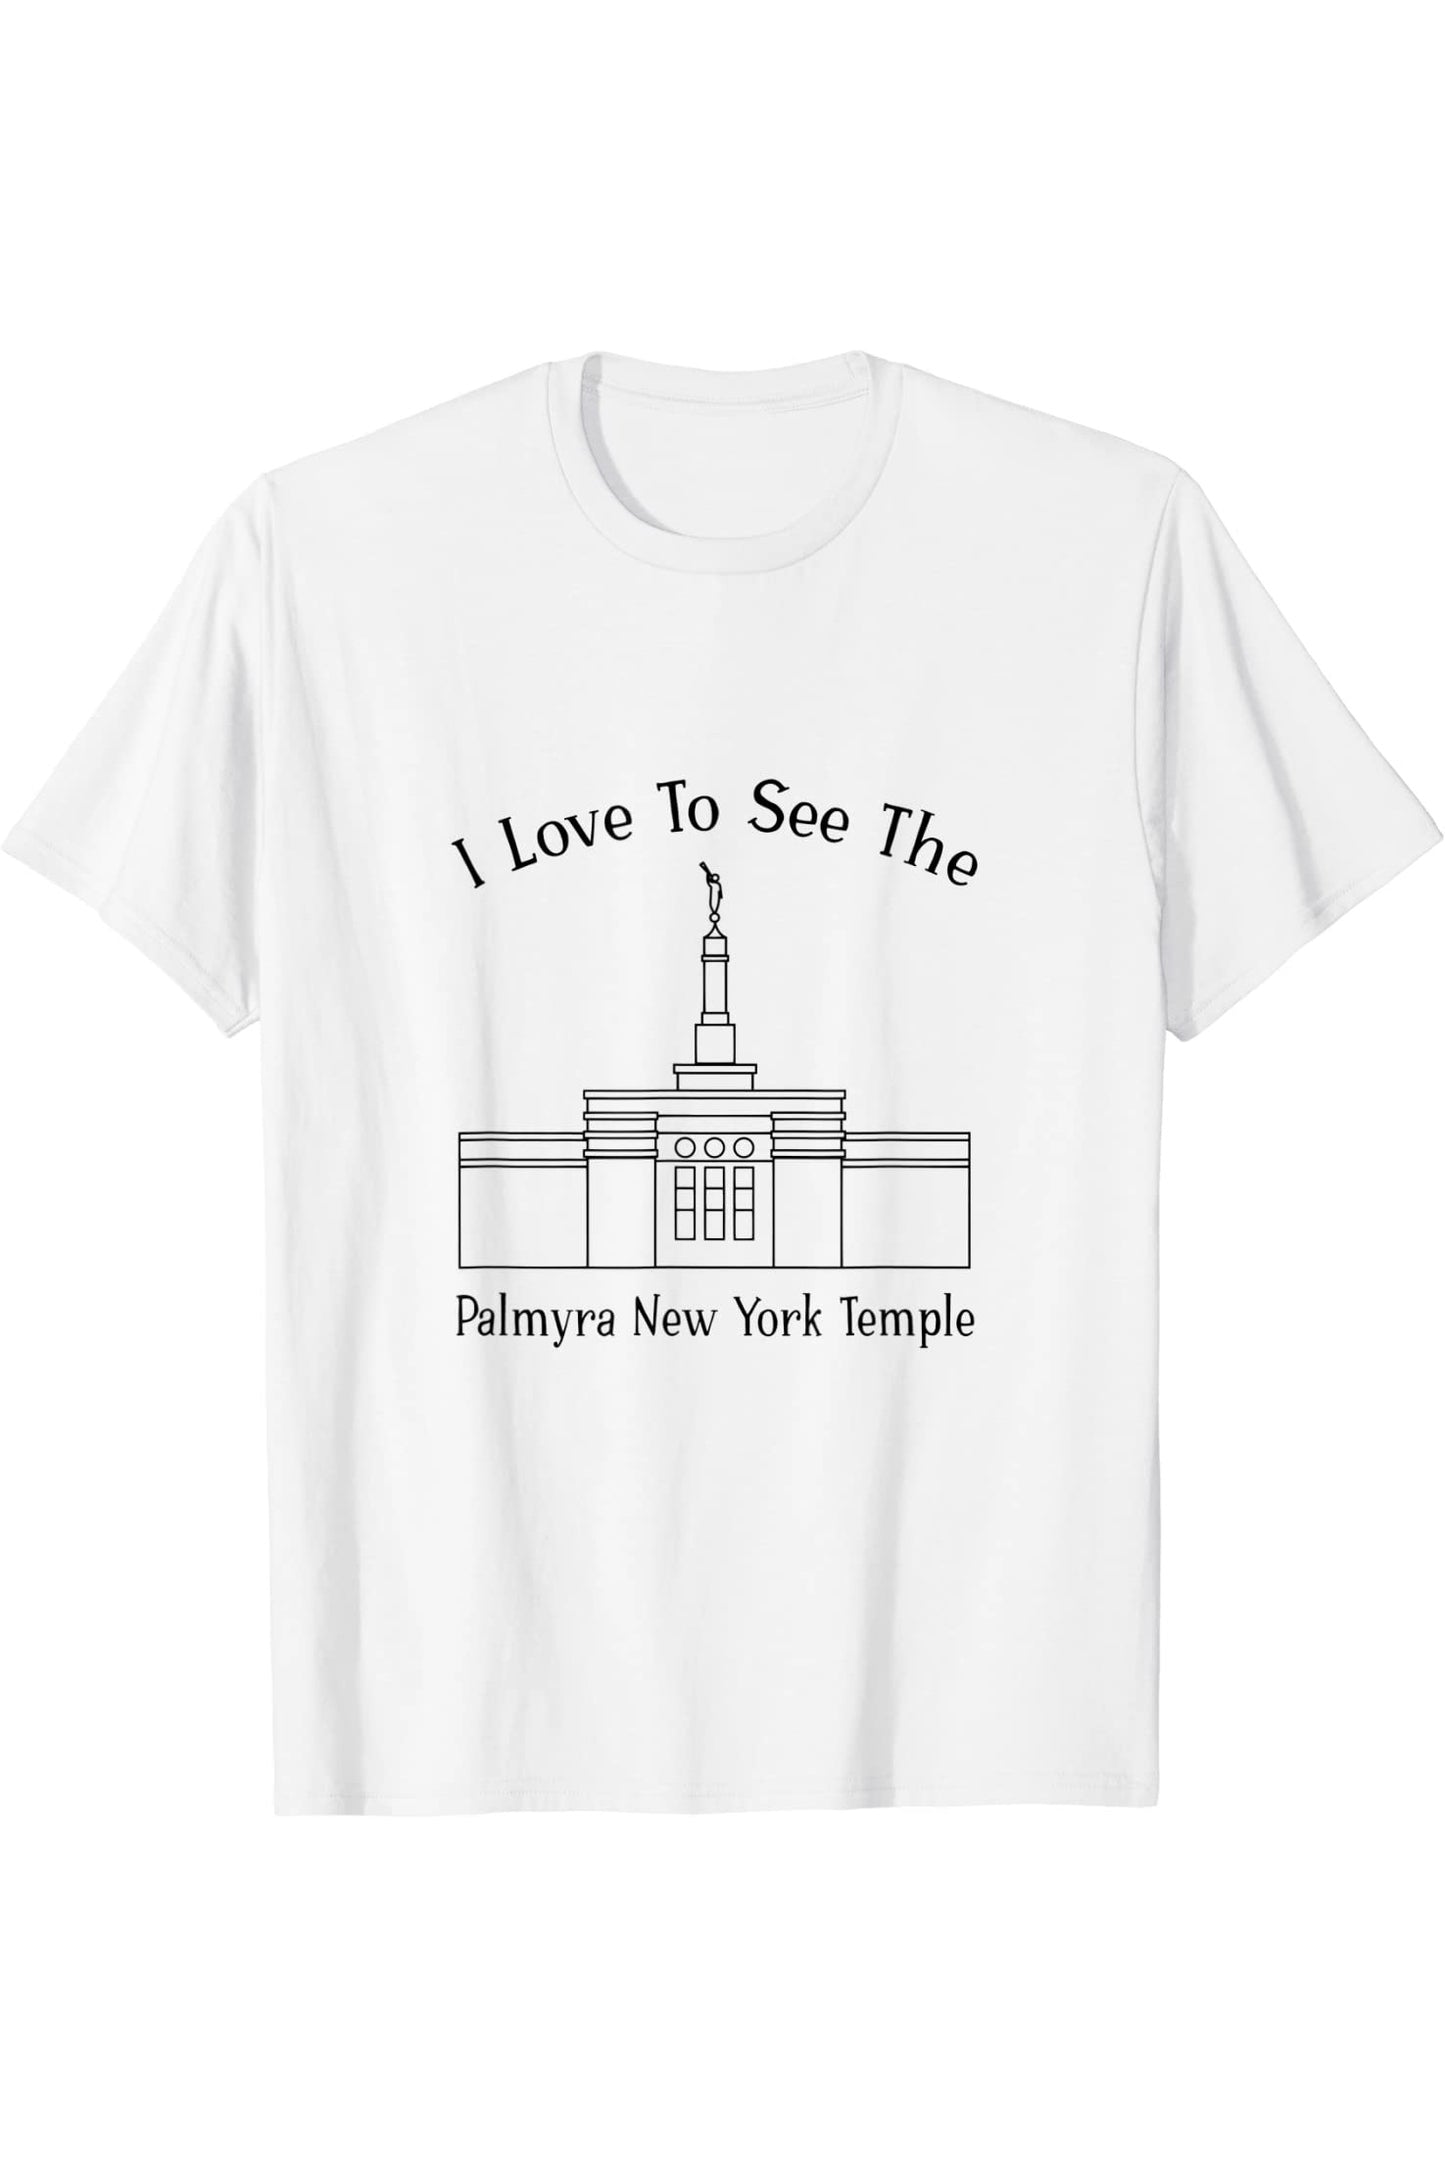 Palmyra New York Temple T-Shirt - Happy Style (English) US